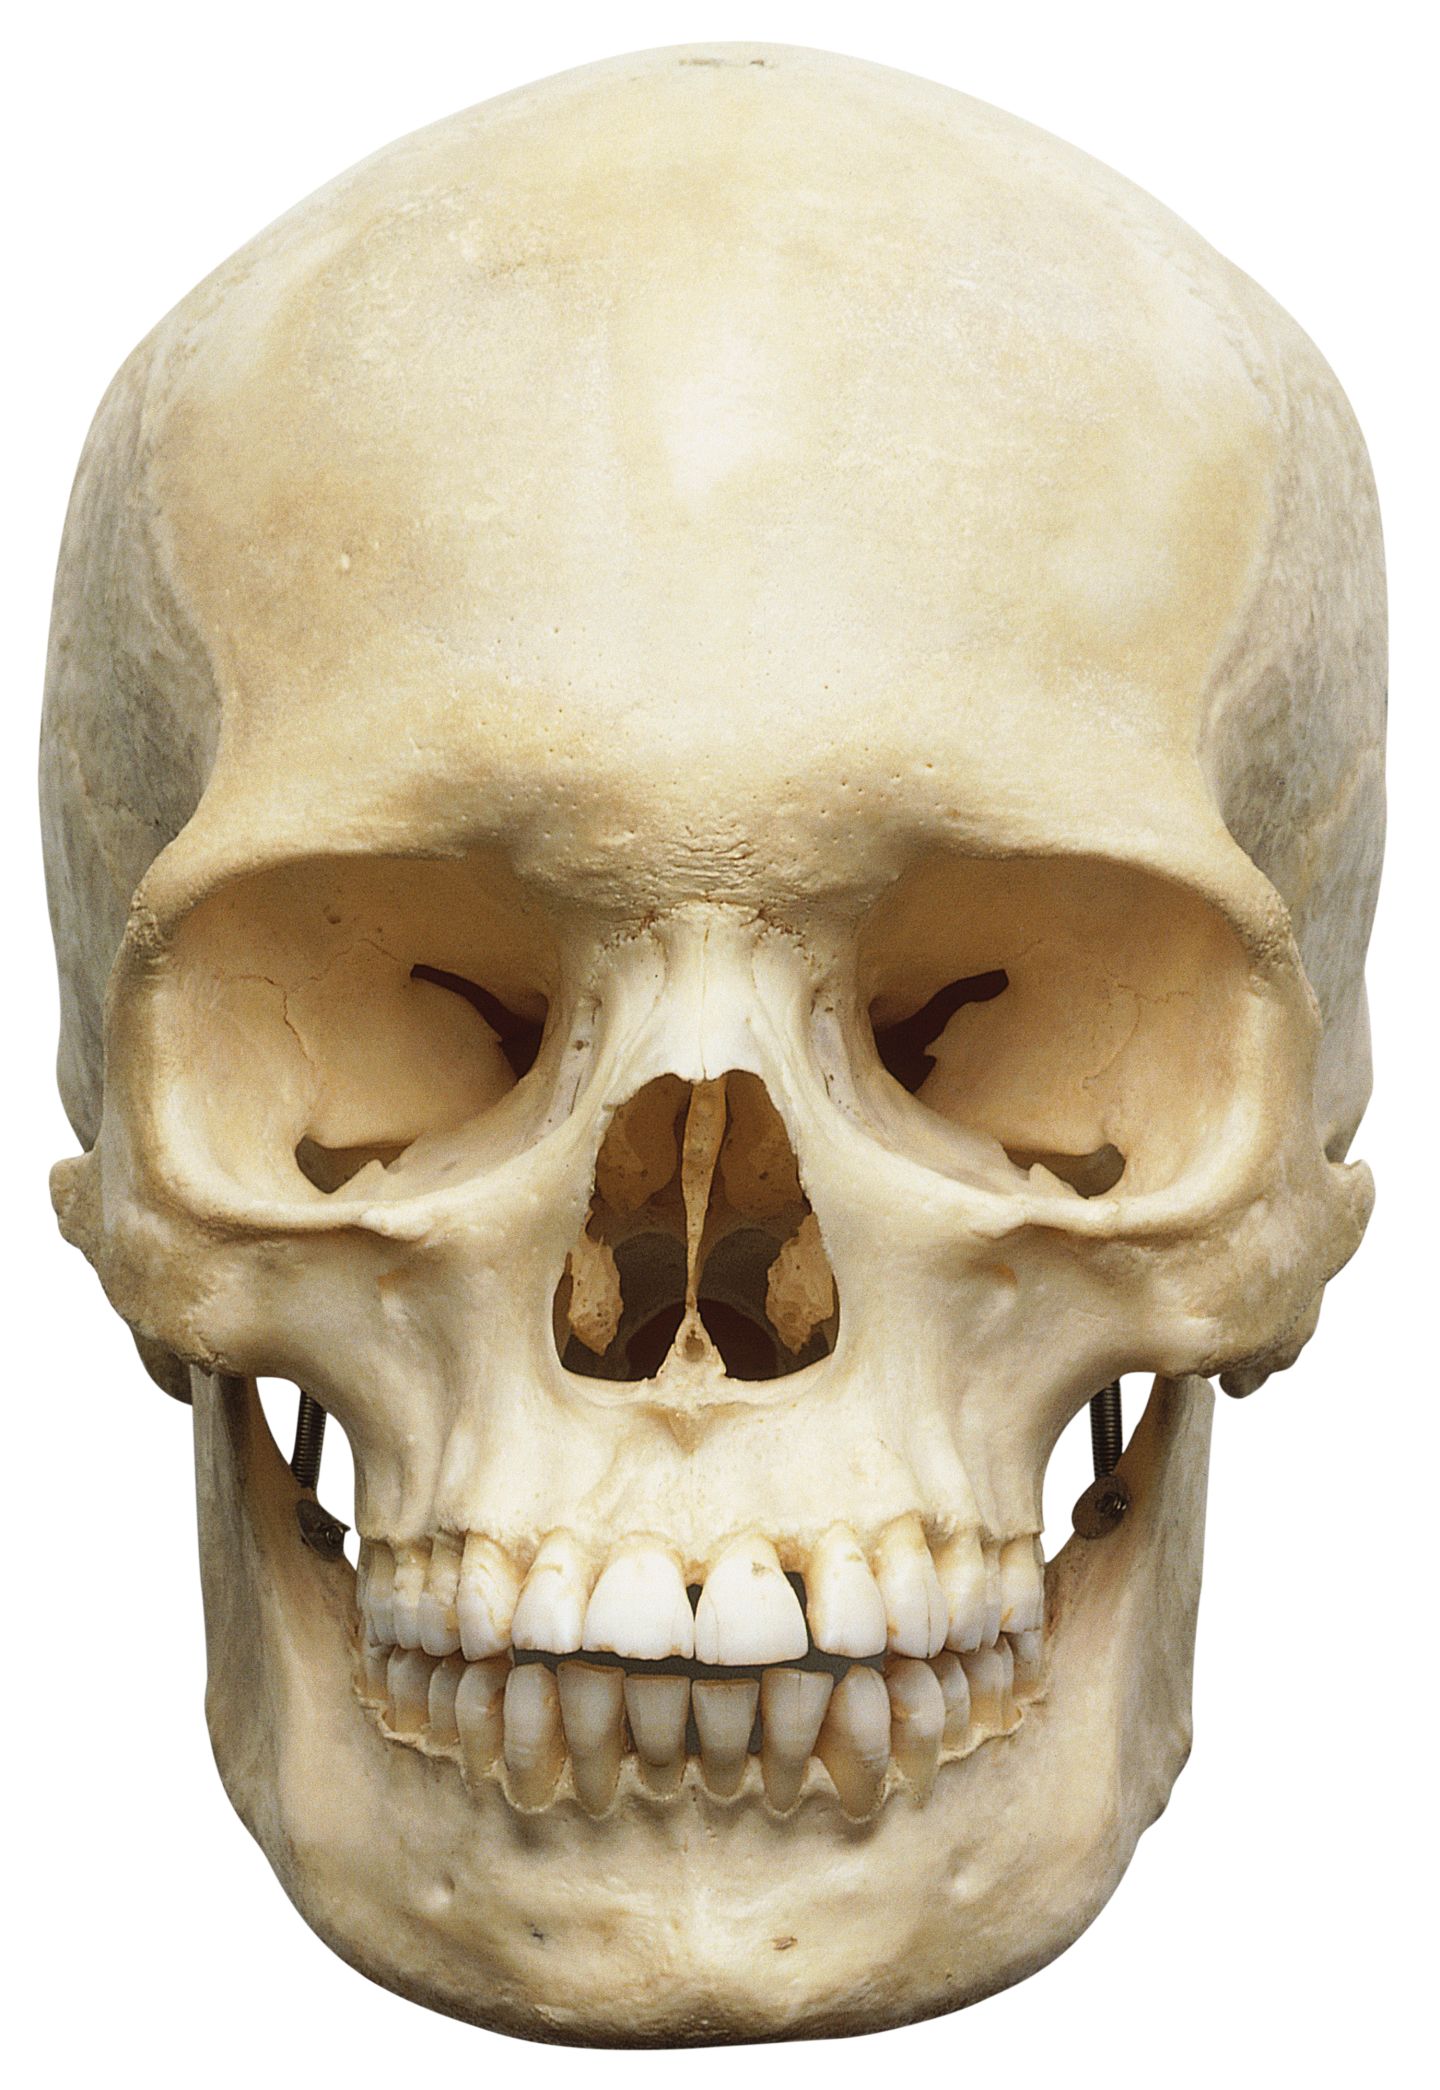 Human Skull Anatomy | Bones in Human Skull | DK Find Out